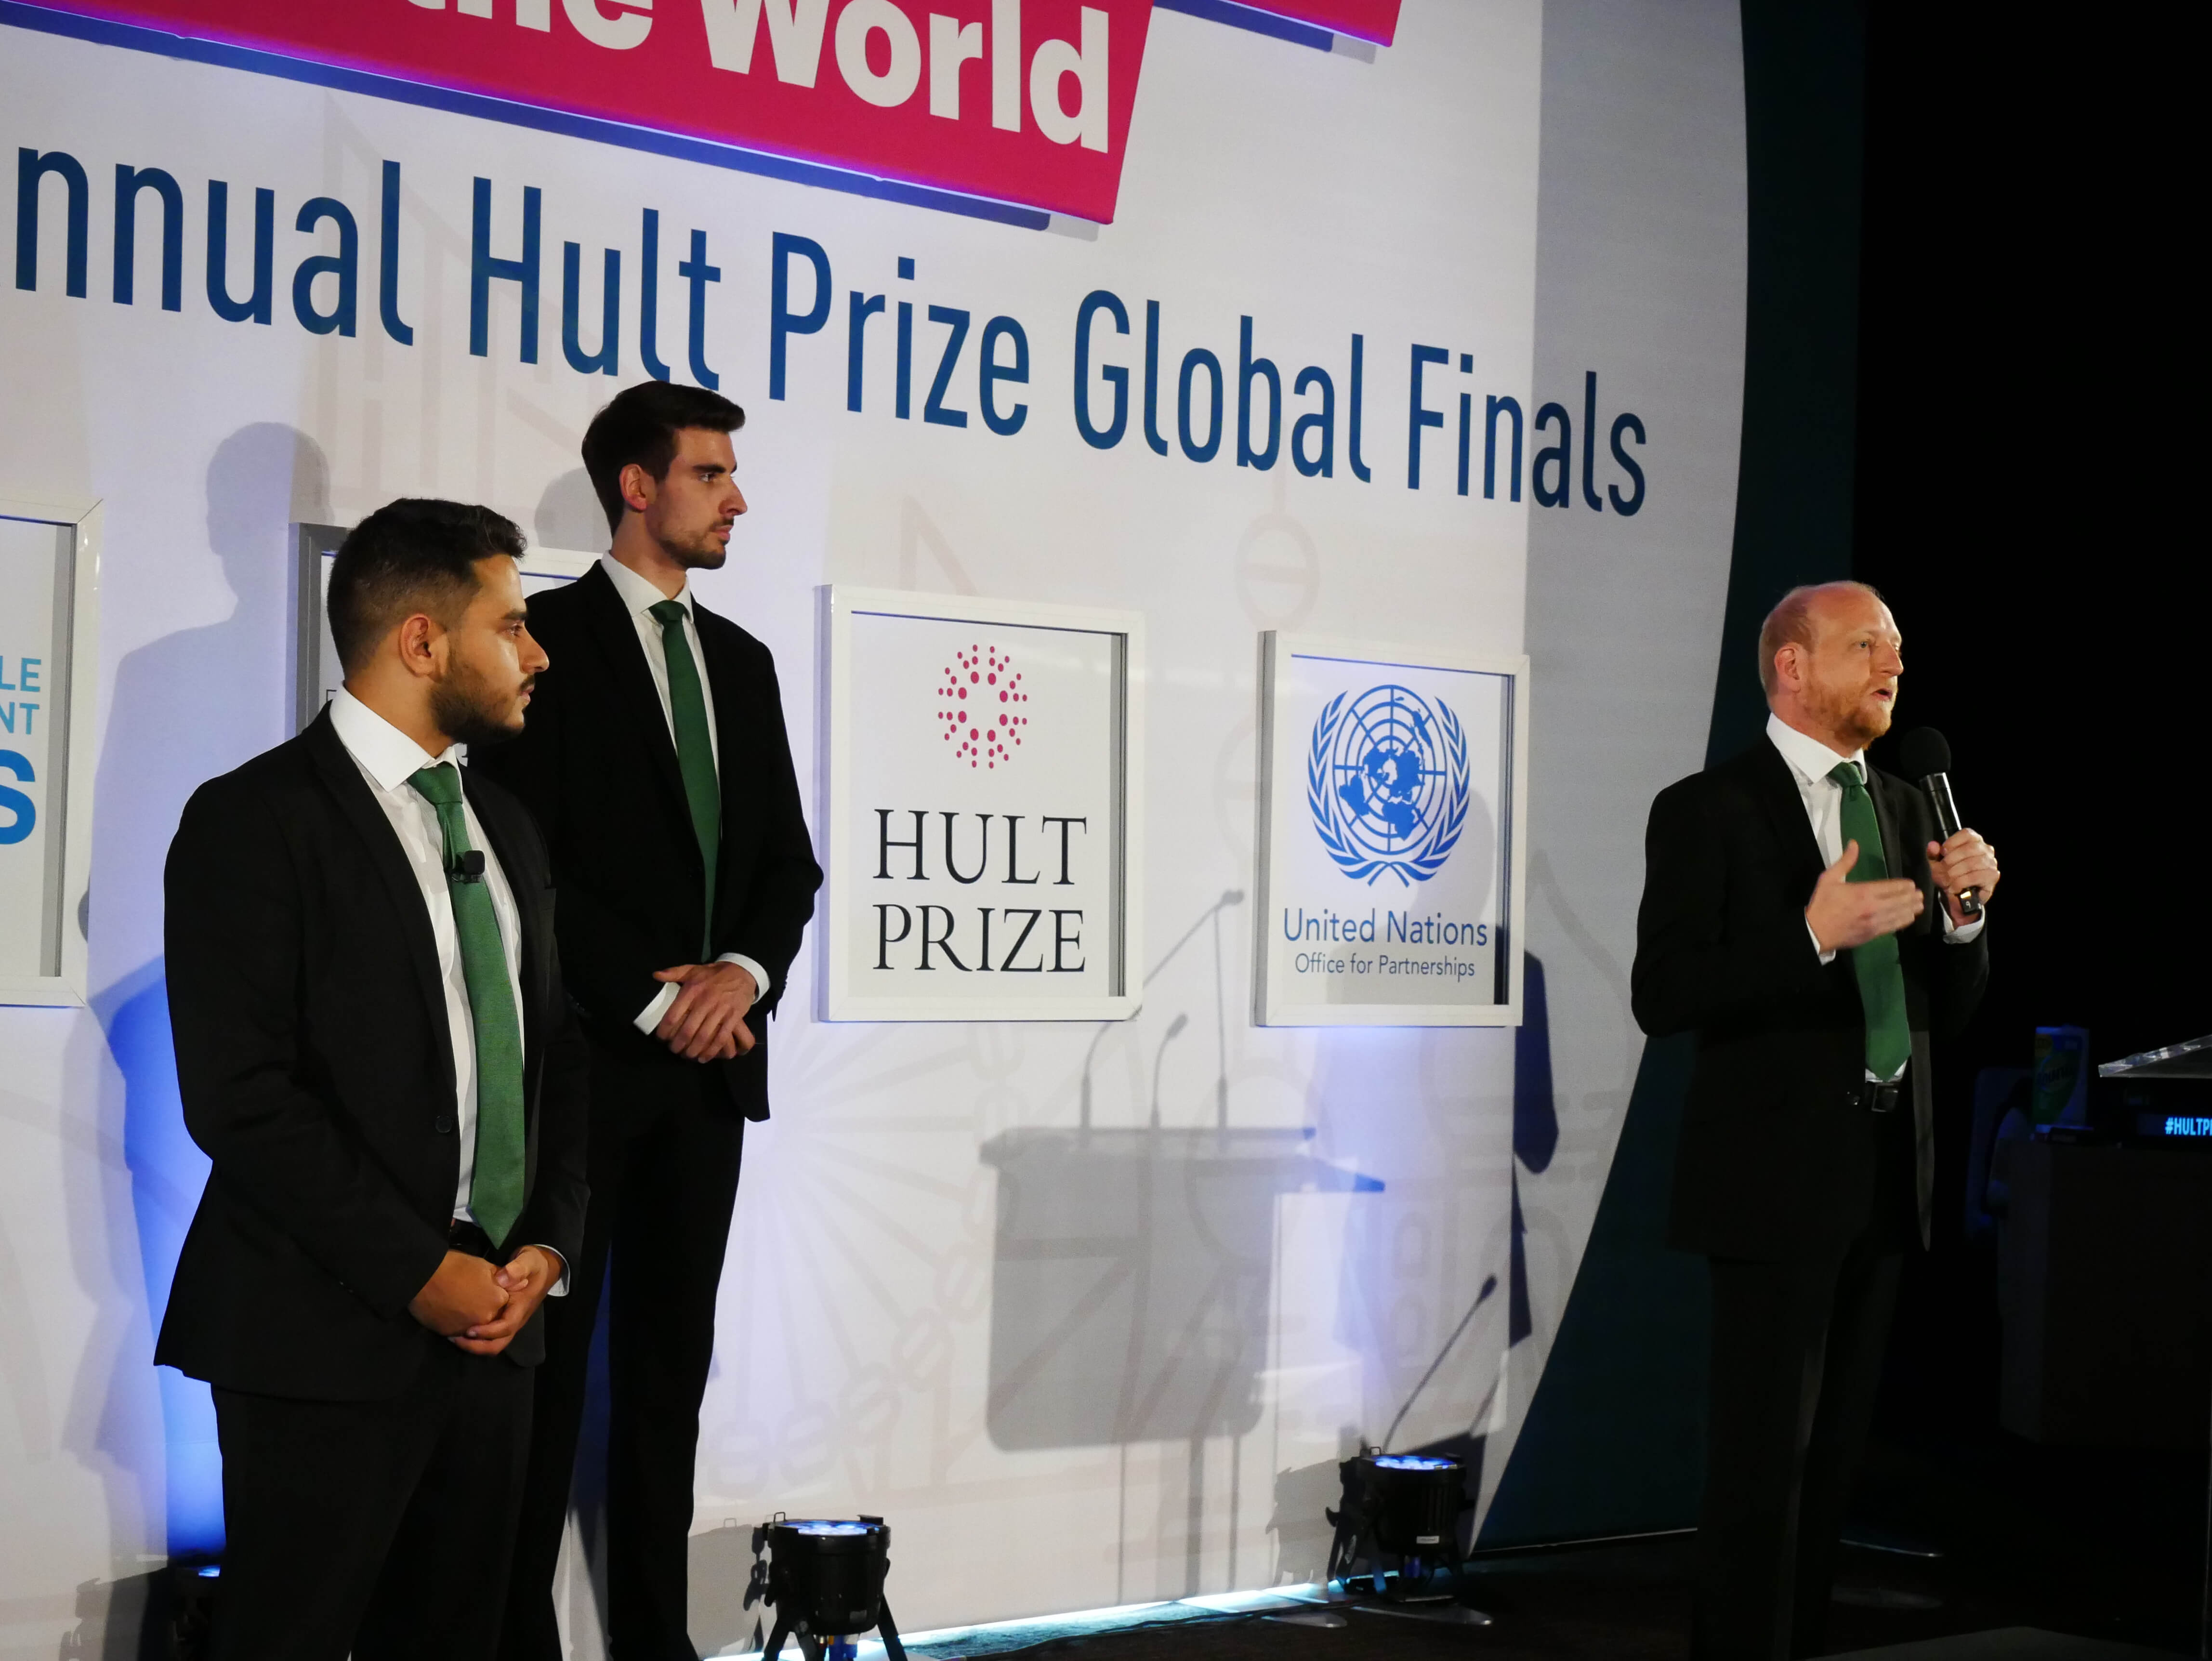 Hult Prize Finalists